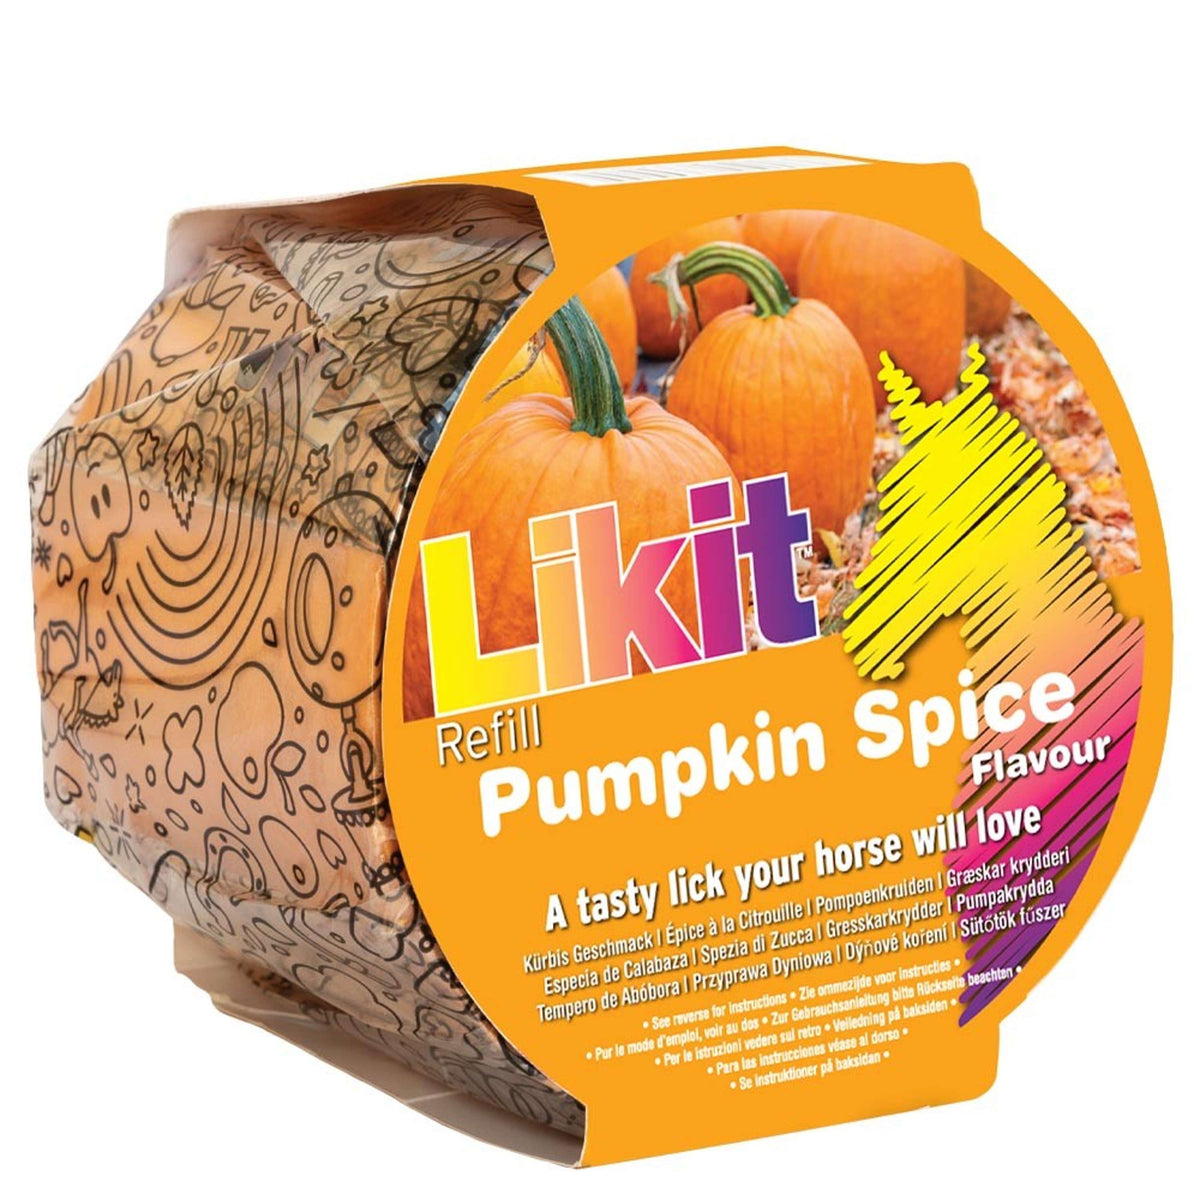 Likit Leckstein Special Pumpkin Spice